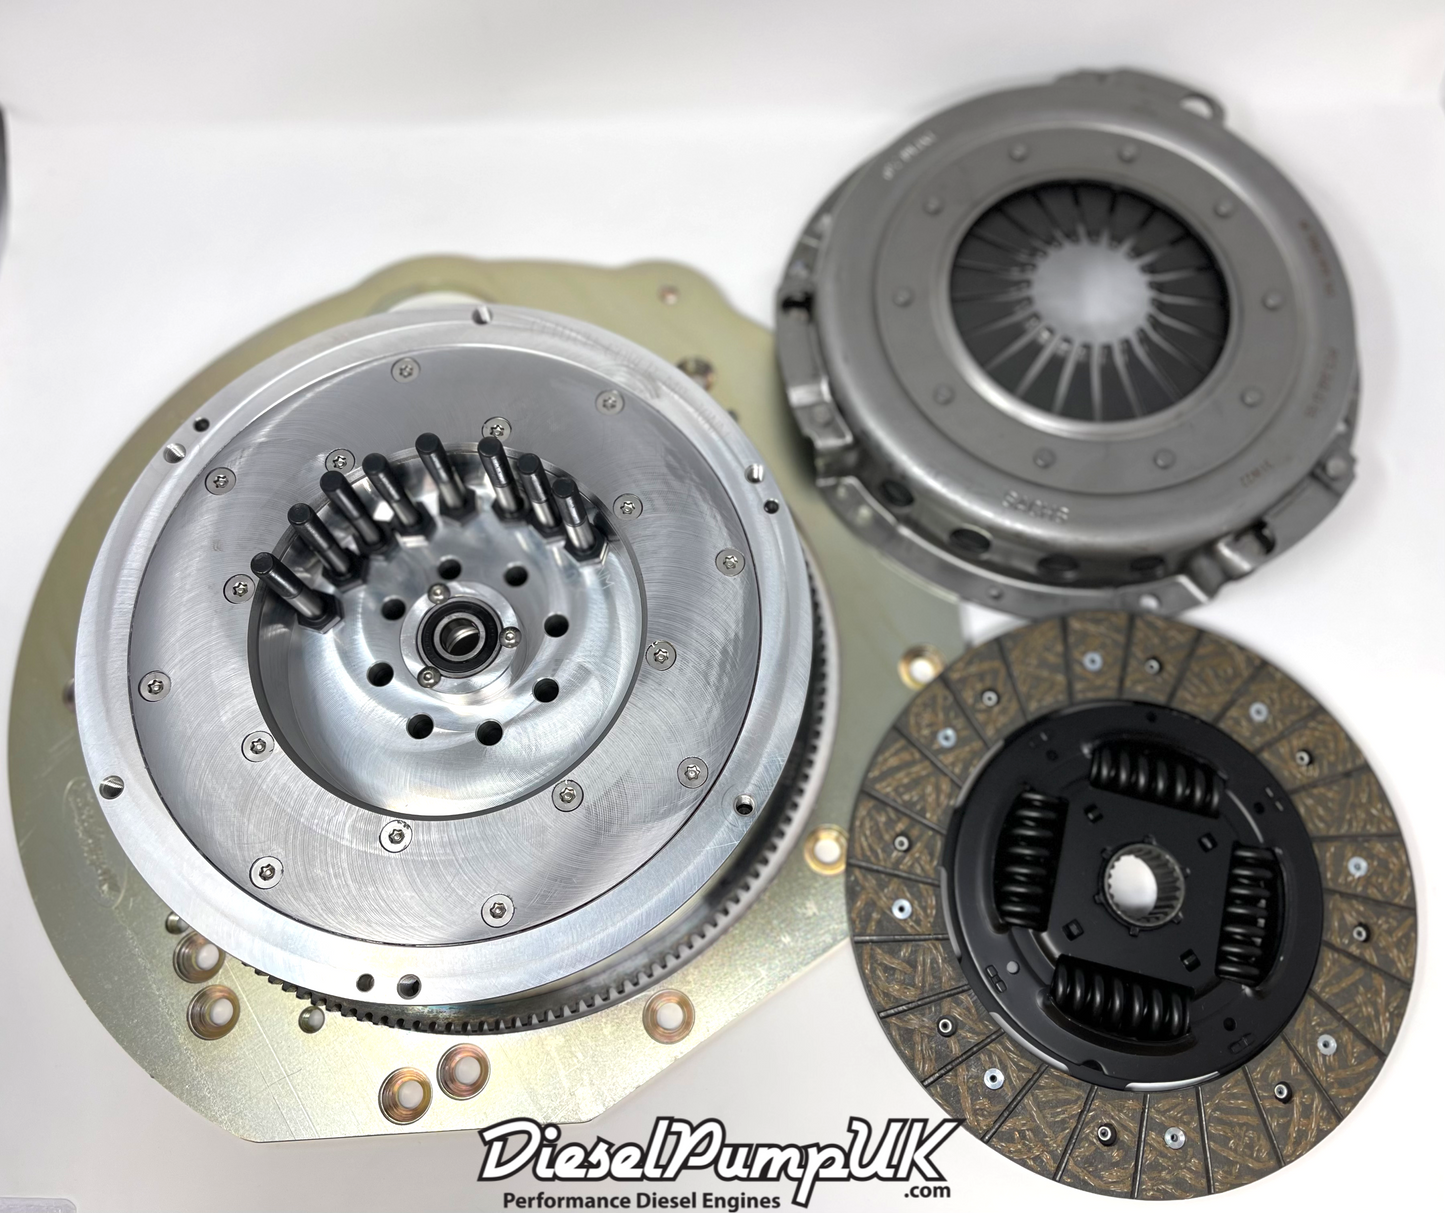 Adaptor KIT for BMW ZF5 / ZF6 Gearbox to Mercedes OM60x Engine